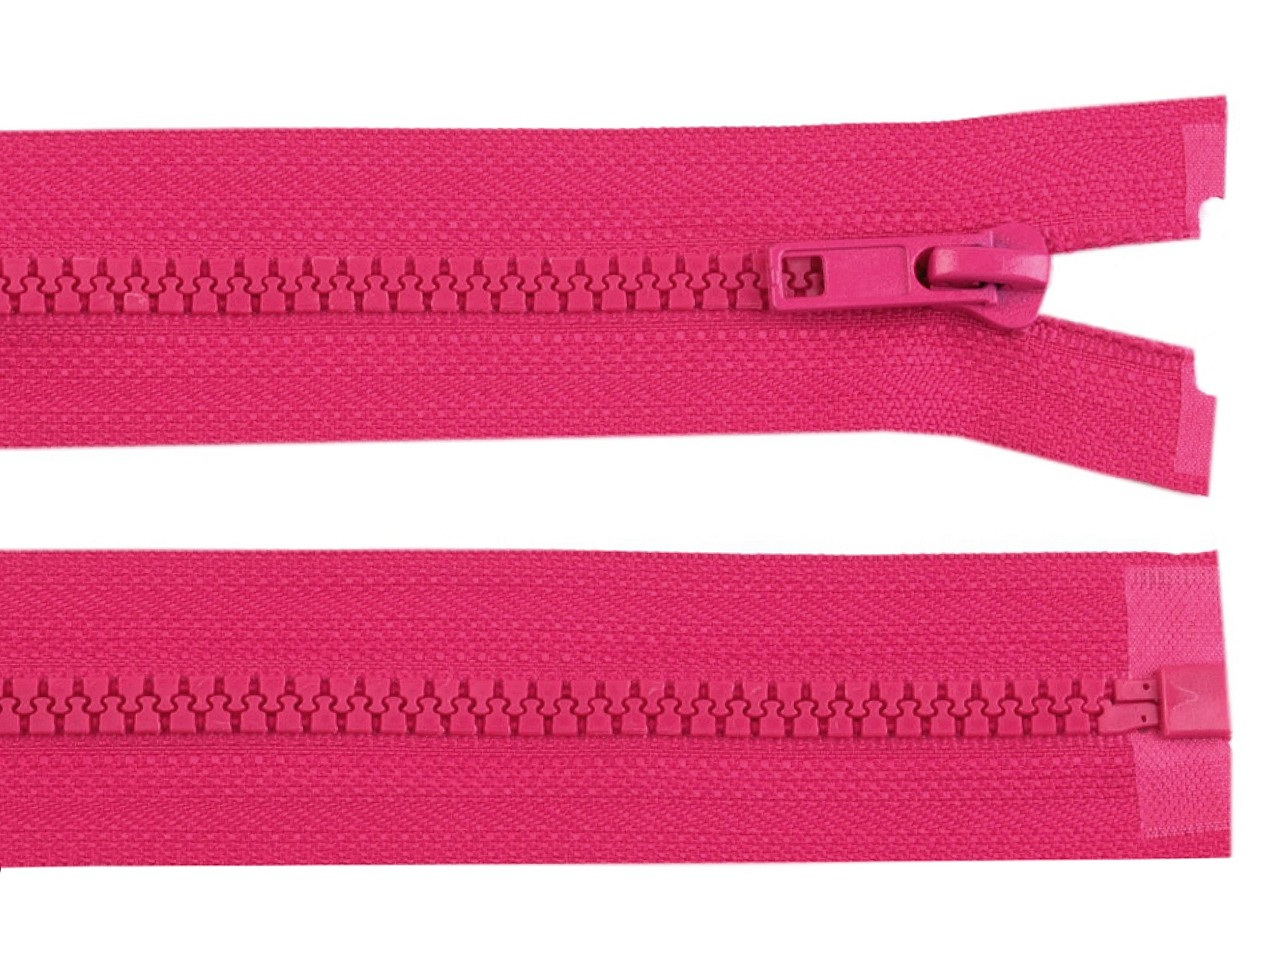 Kostěný zip No 5 délka 55 cm bundový, barva 145 pink